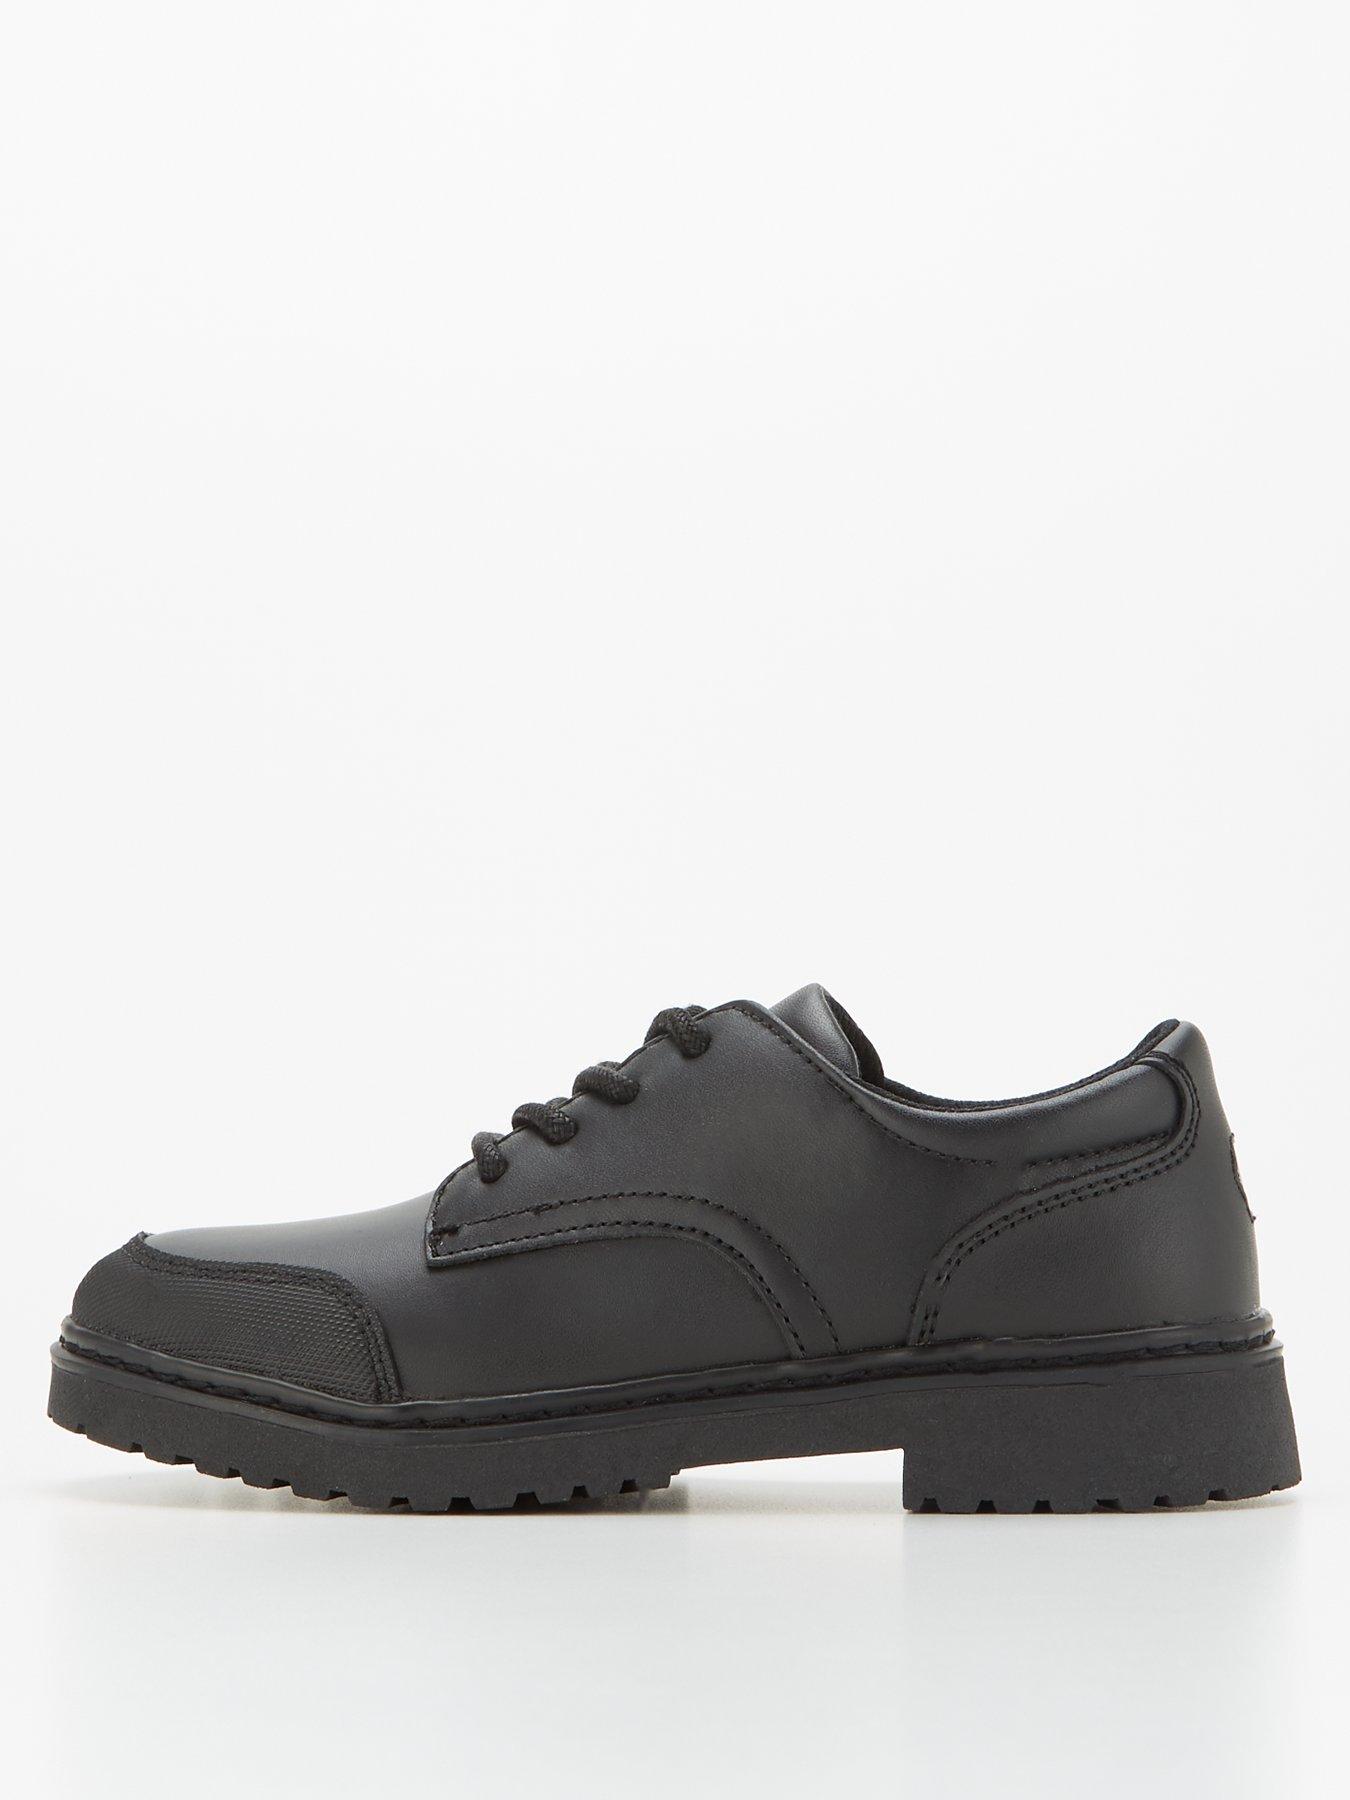 Shoes & boots Boys Lace Up Leather School Shoe - Black